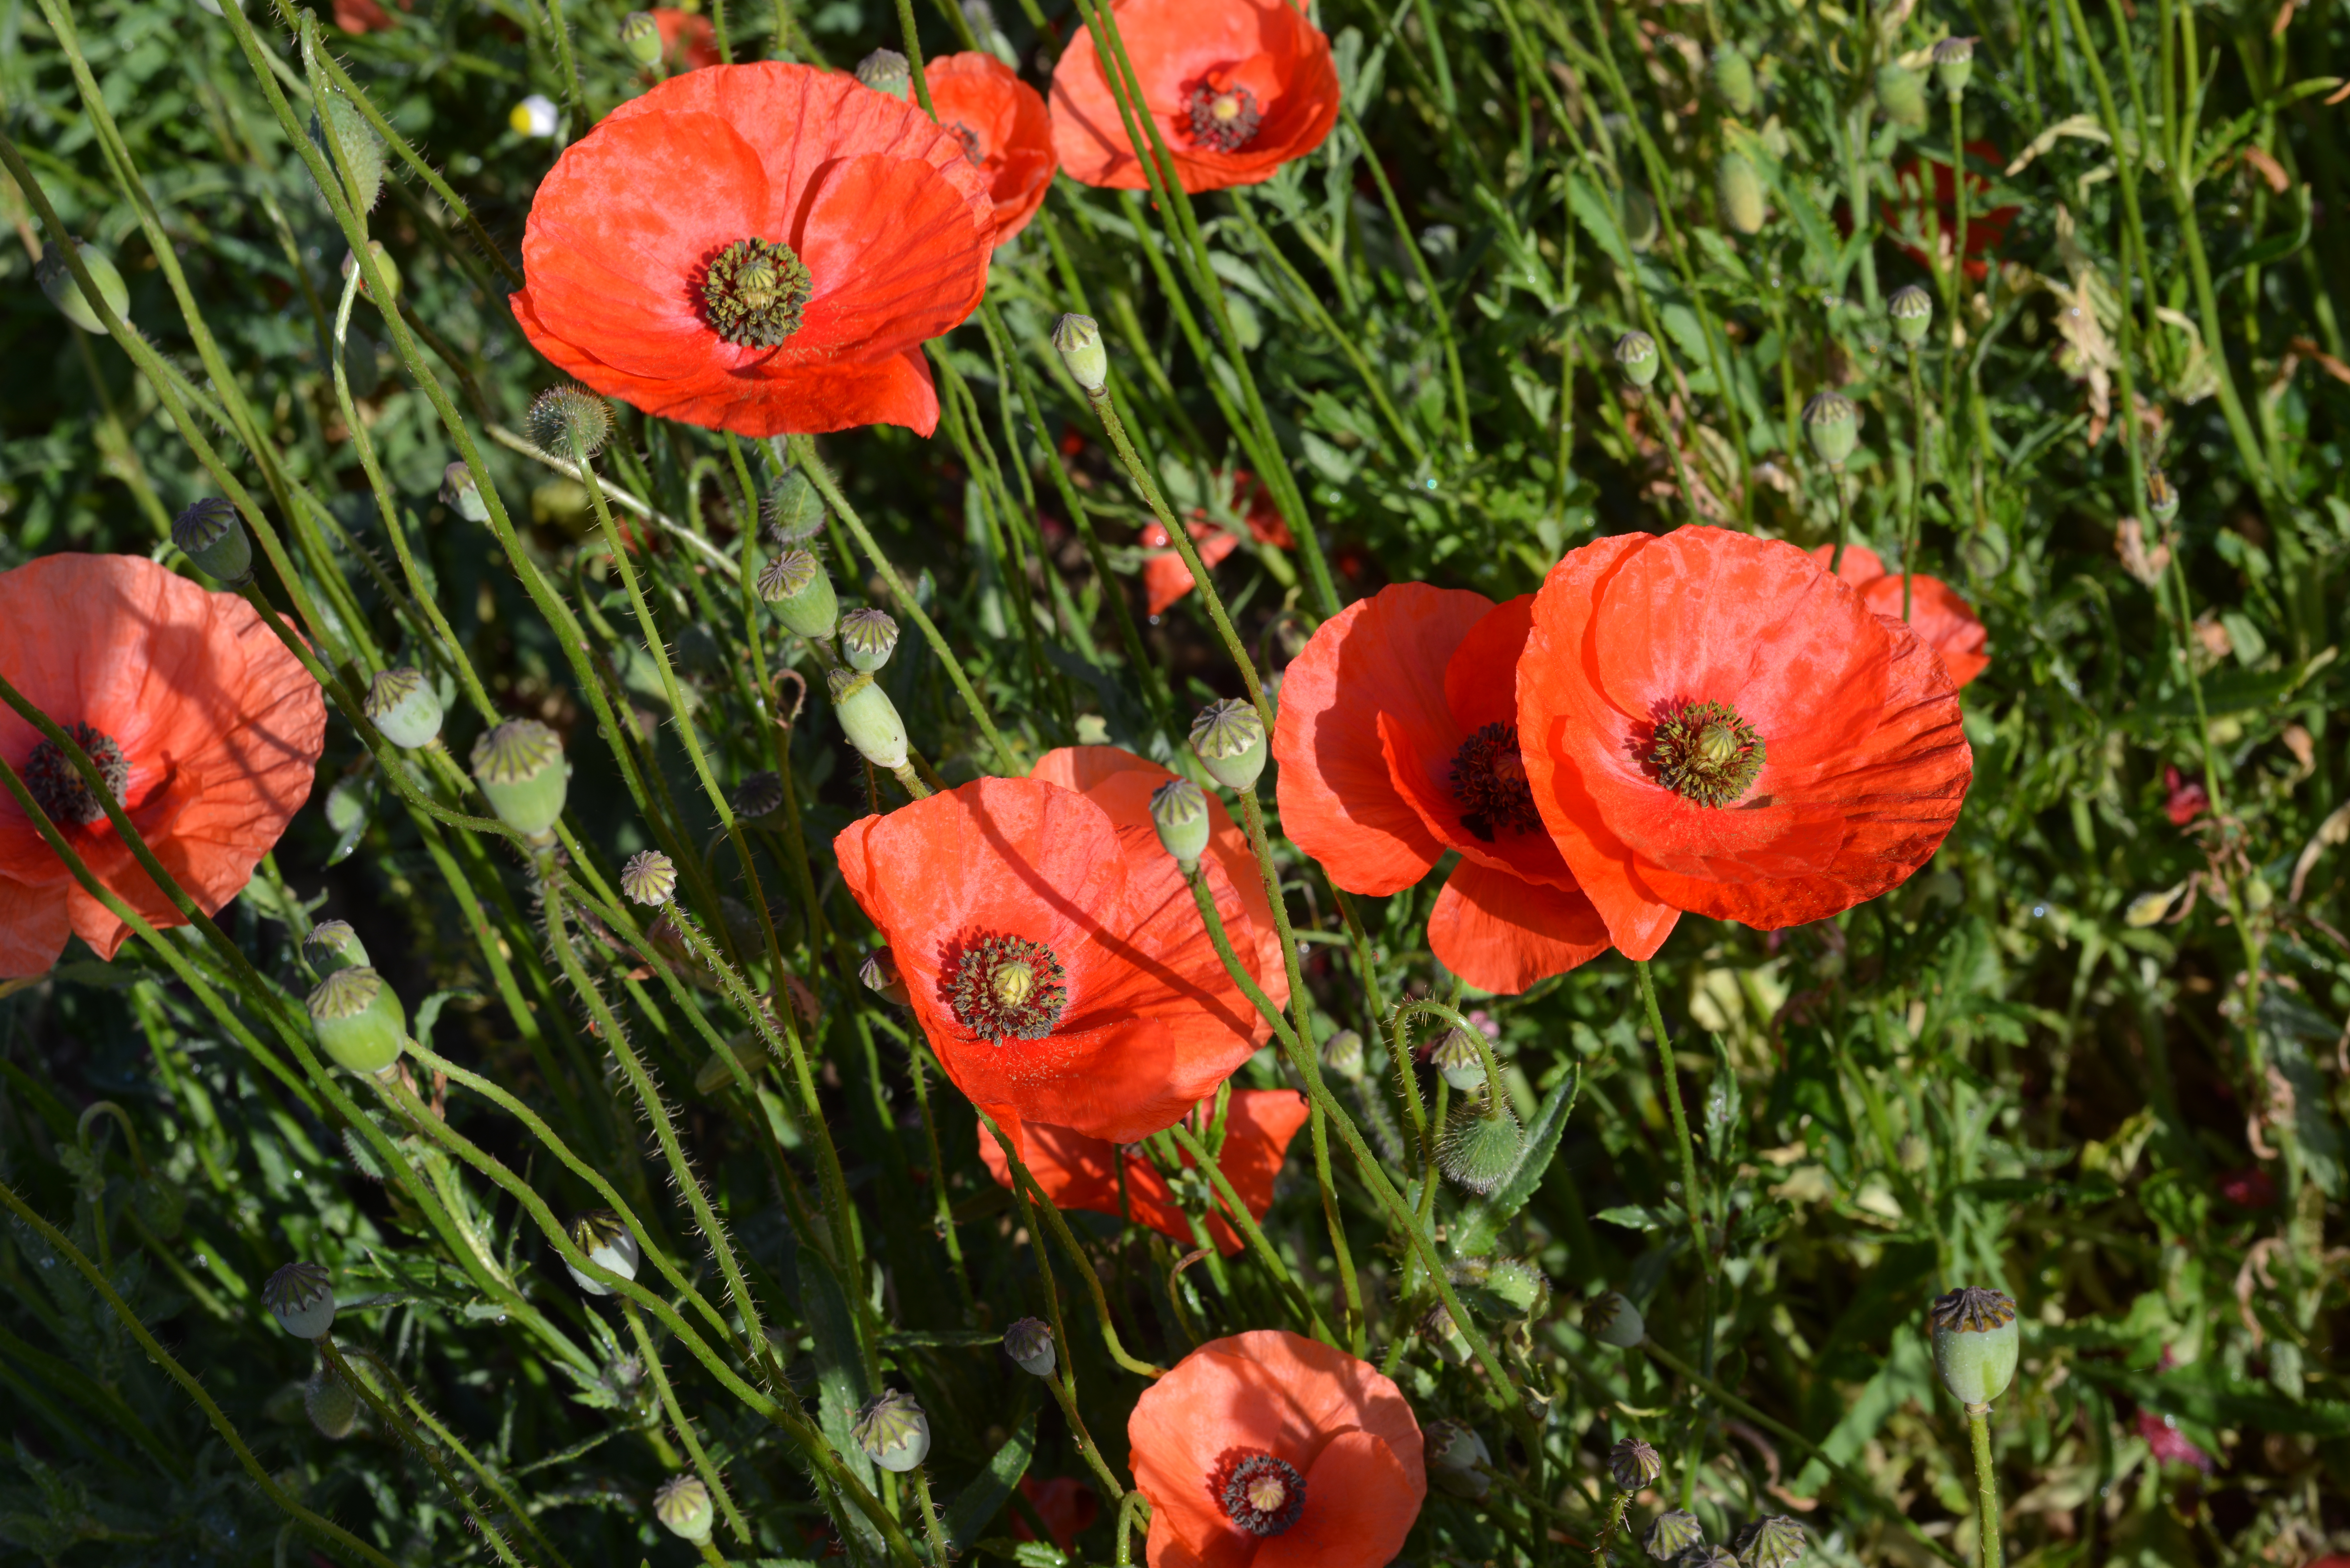 General 7360x4912 Klatschmohn flowers Papaver rhoeas corn rose red flowers poppies plants